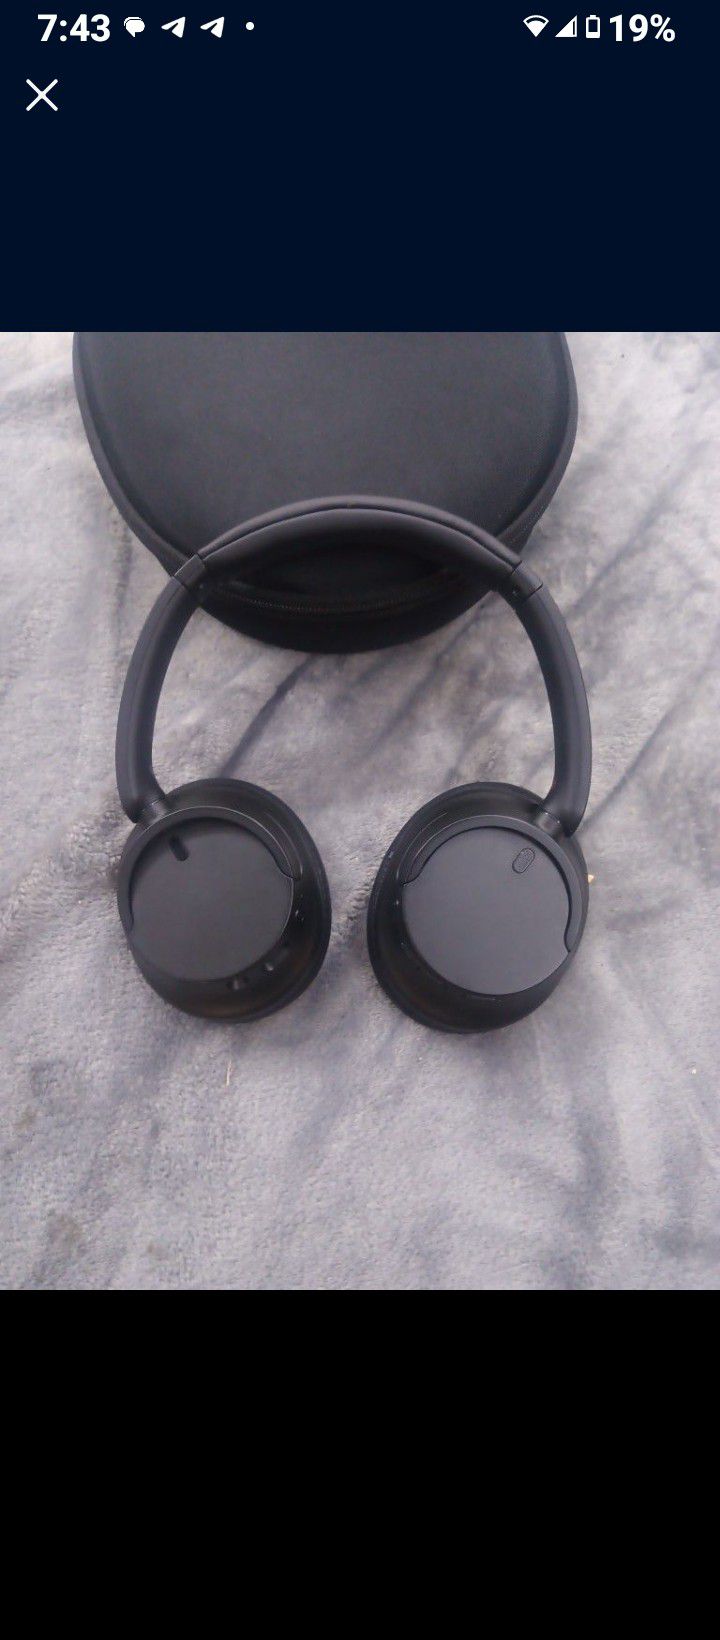 Sony WH-CH720N Headphones